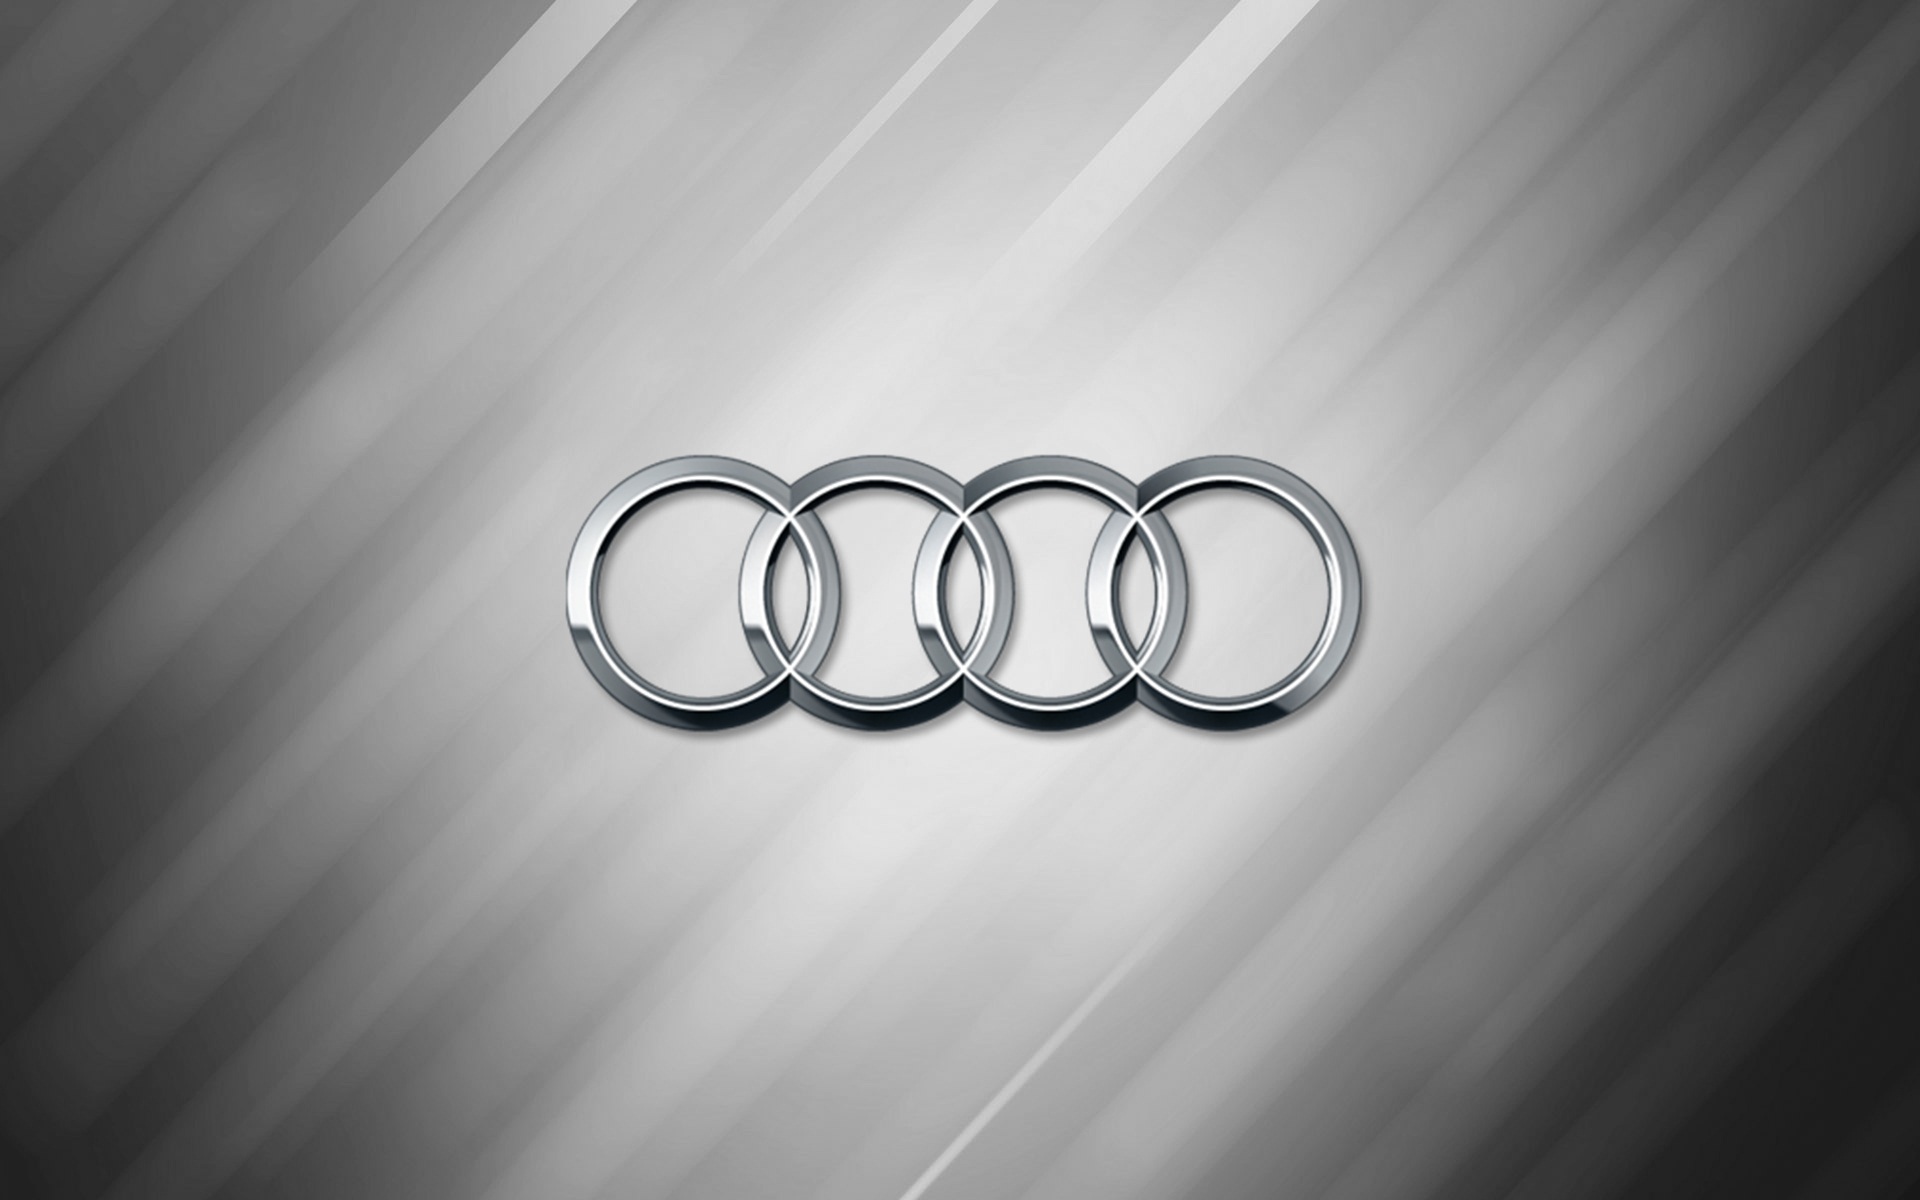 19+ Audi A4 Logo Wallpaper High Resolution free download